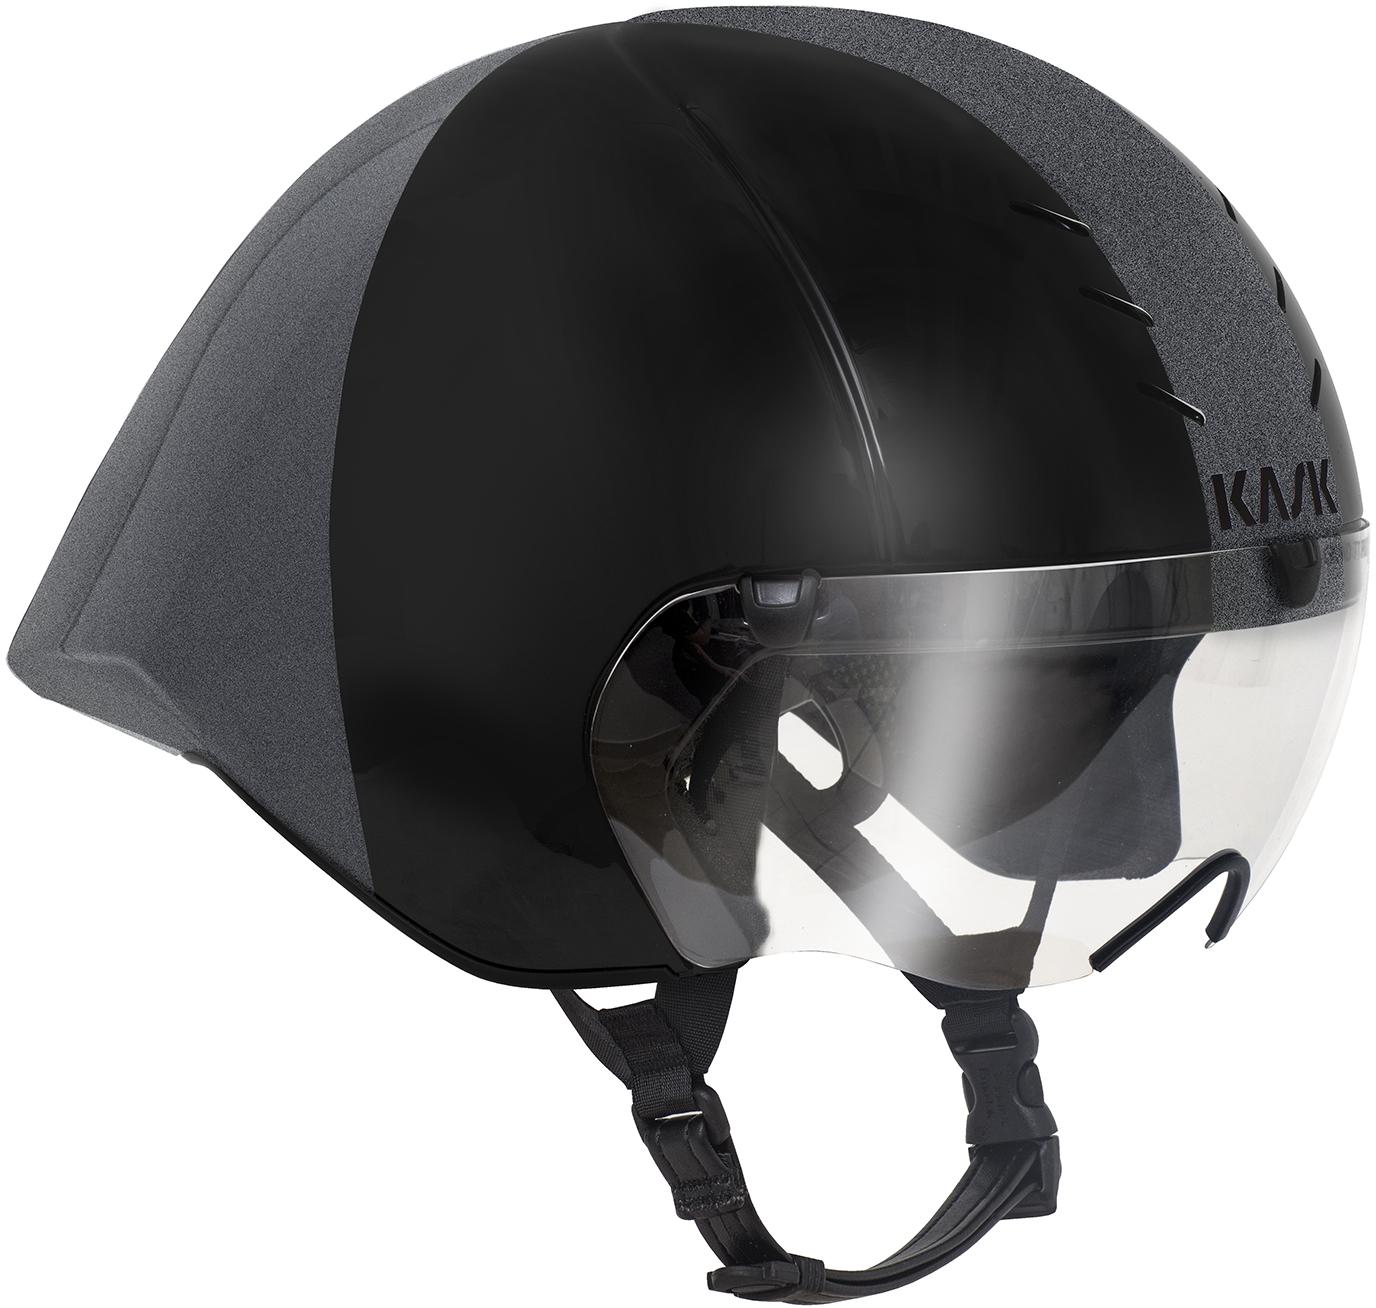 Kask Mistral Aero Helmet - Black/grey